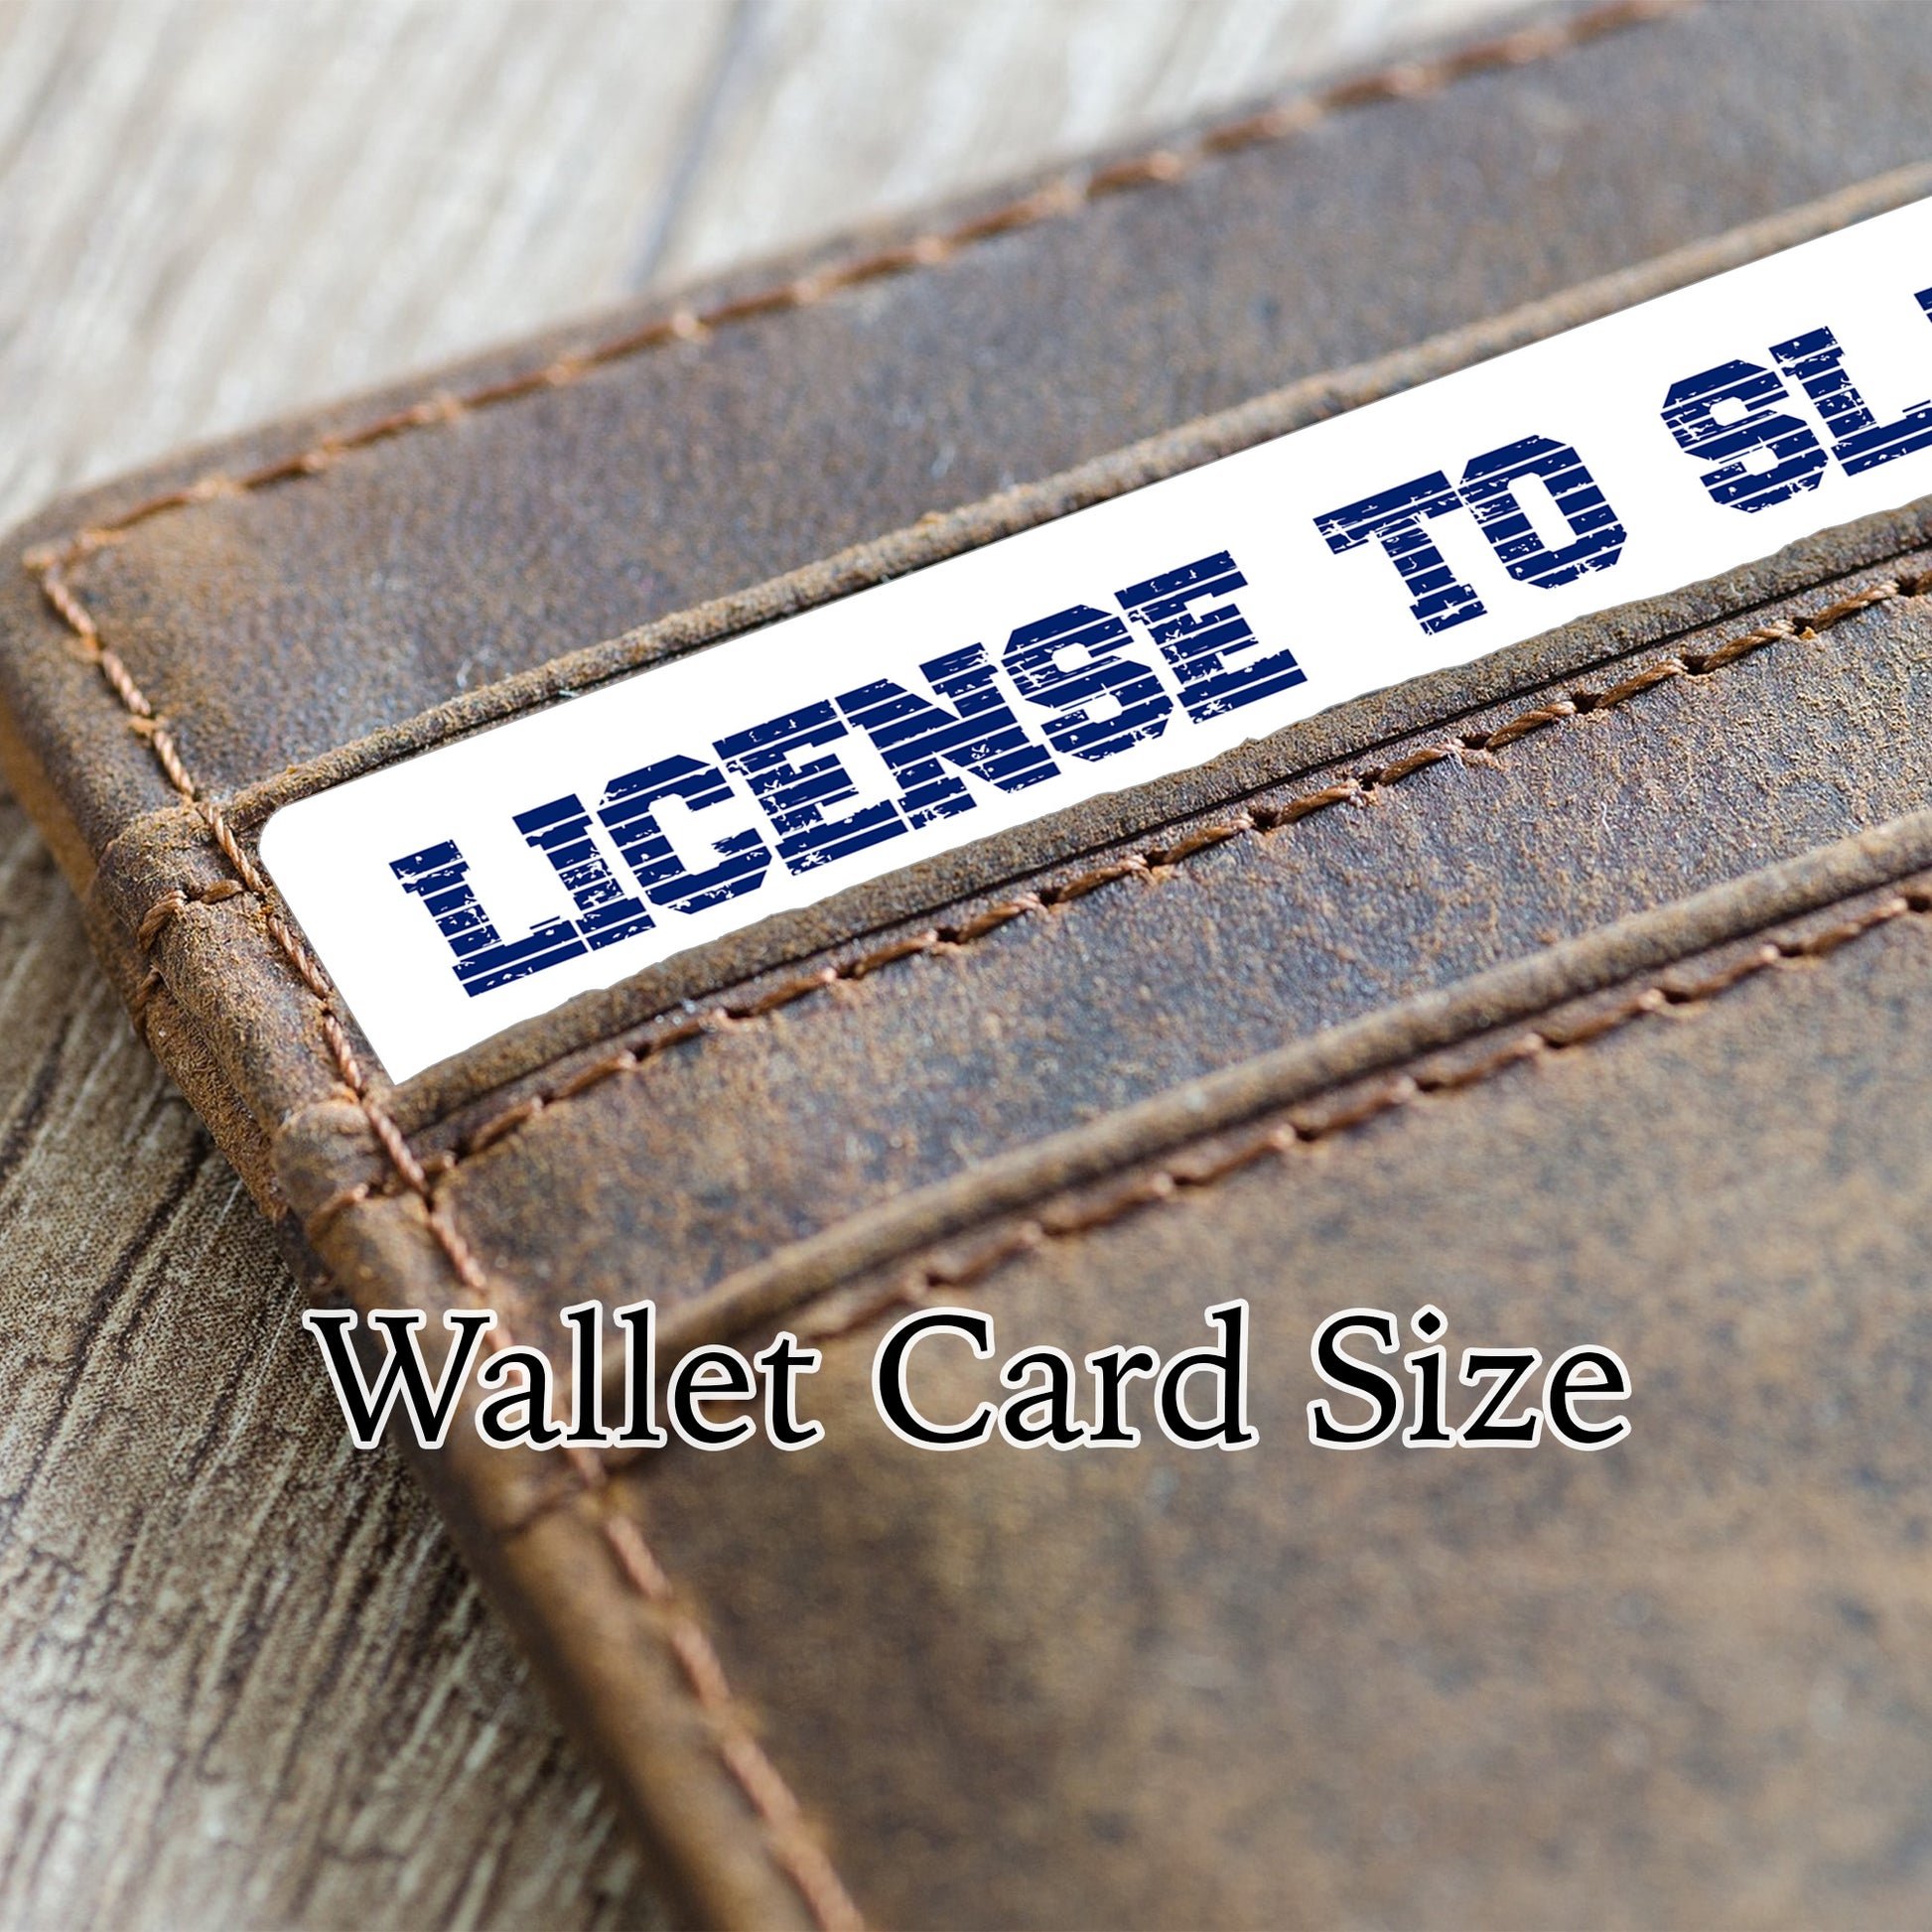 Progress pride gay personalised license to slay card